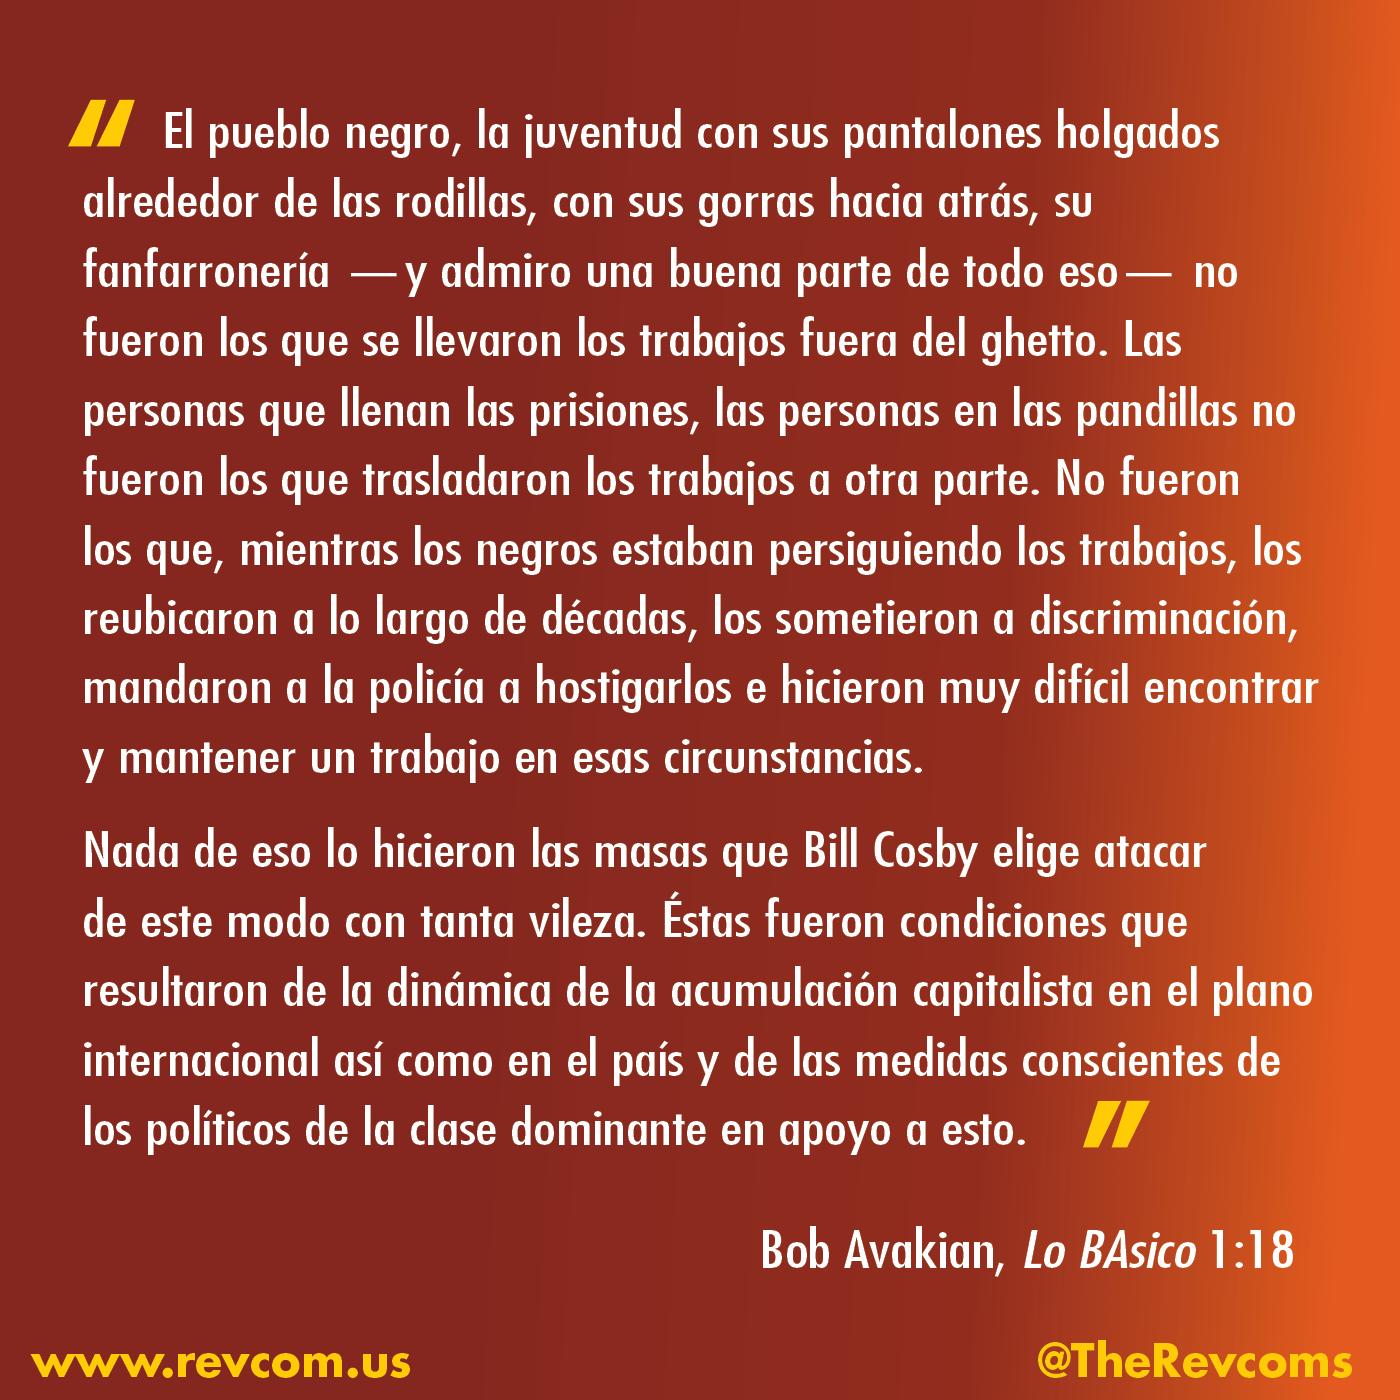 BAsics 1-18 Spanish, Bob Avakian on Black youth